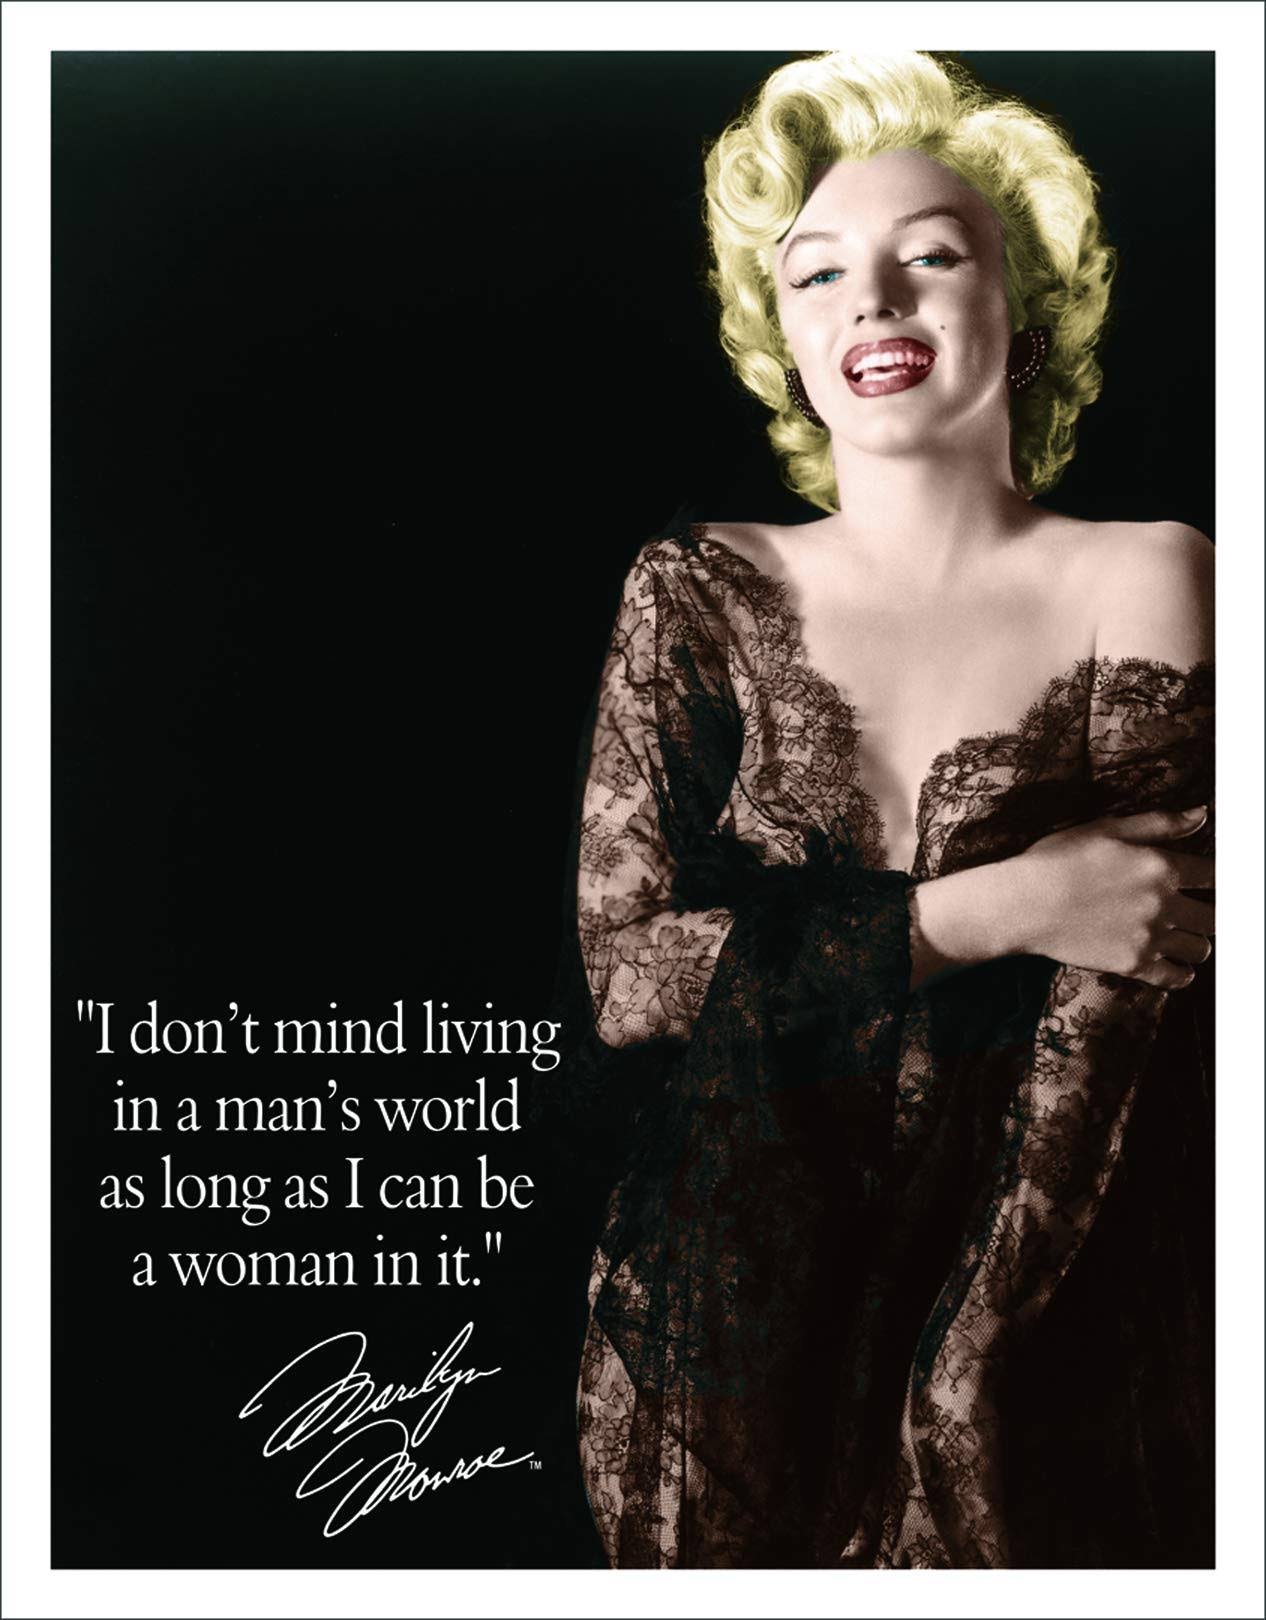 Man's World Marilyn Monroe Tin Sign - 12x16